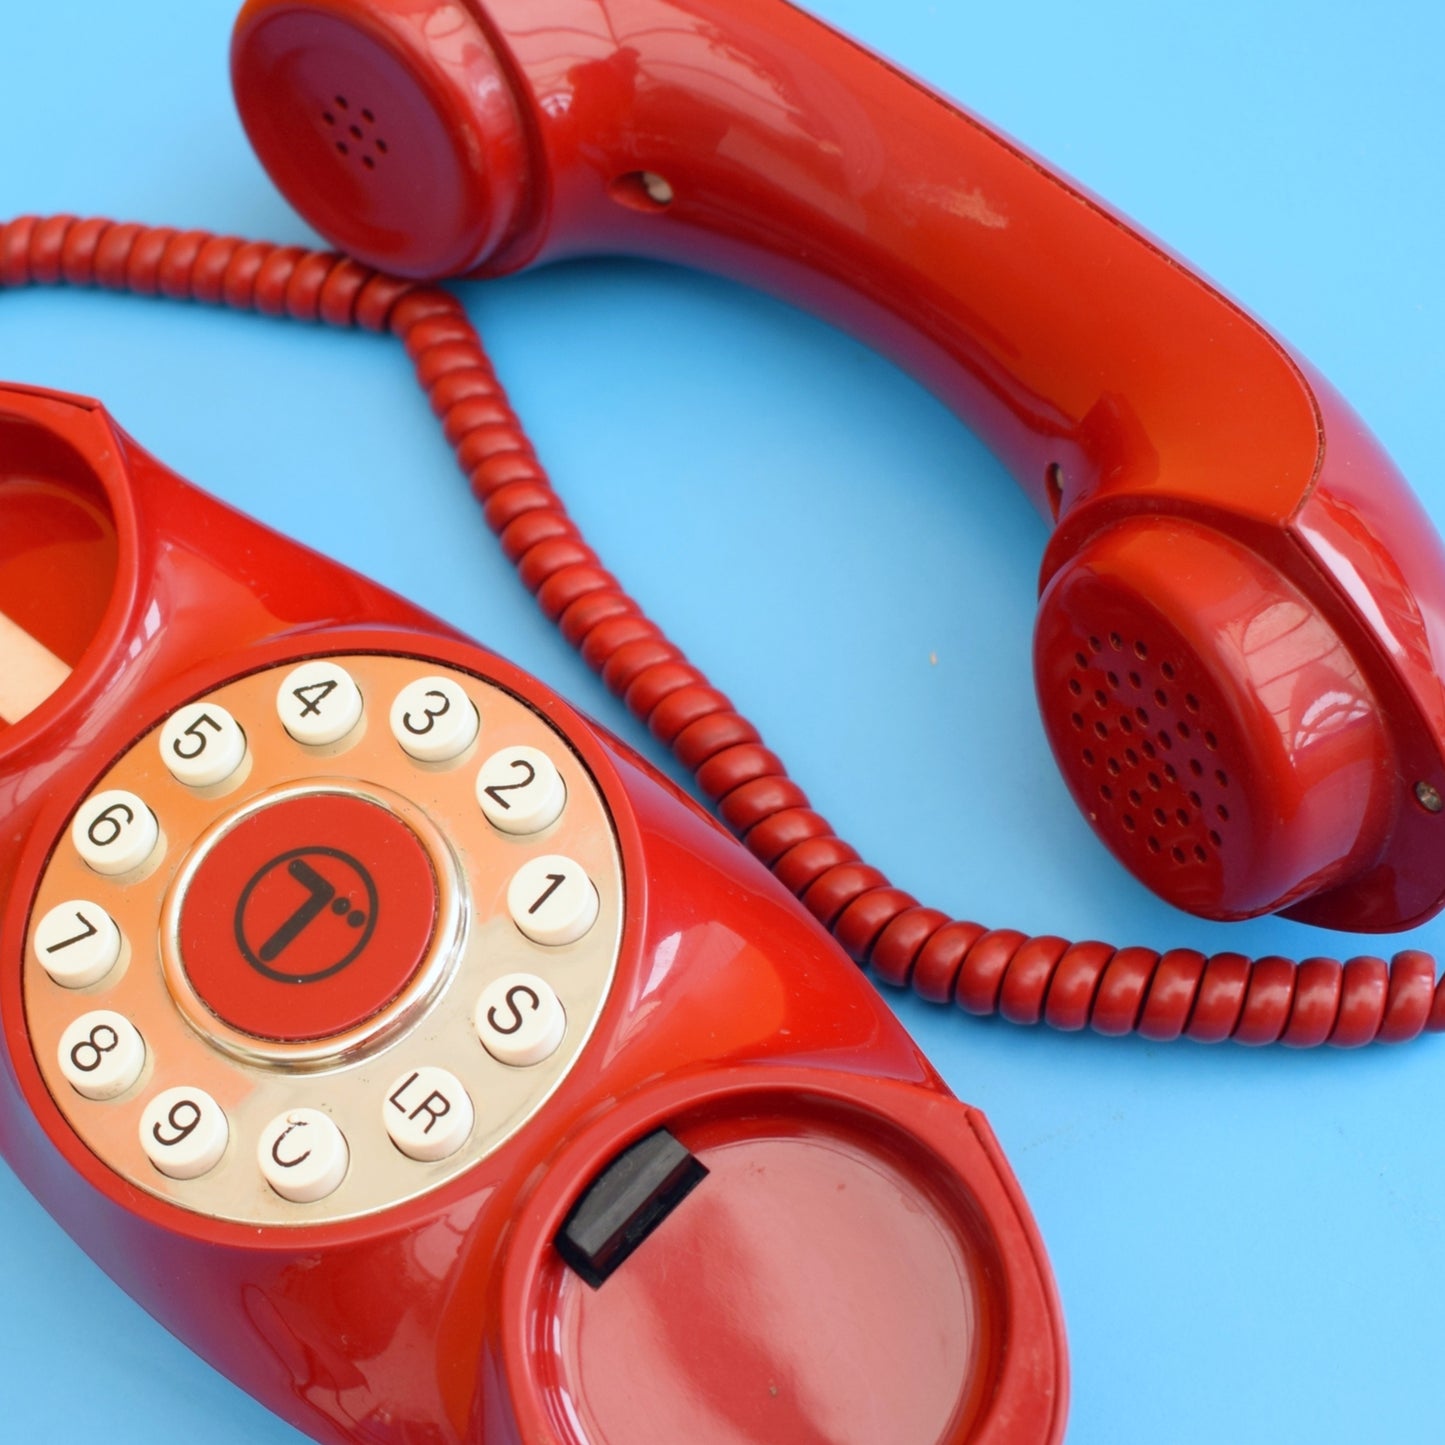 Vintage 1970s Genie Home Phone - Fully Working - Red